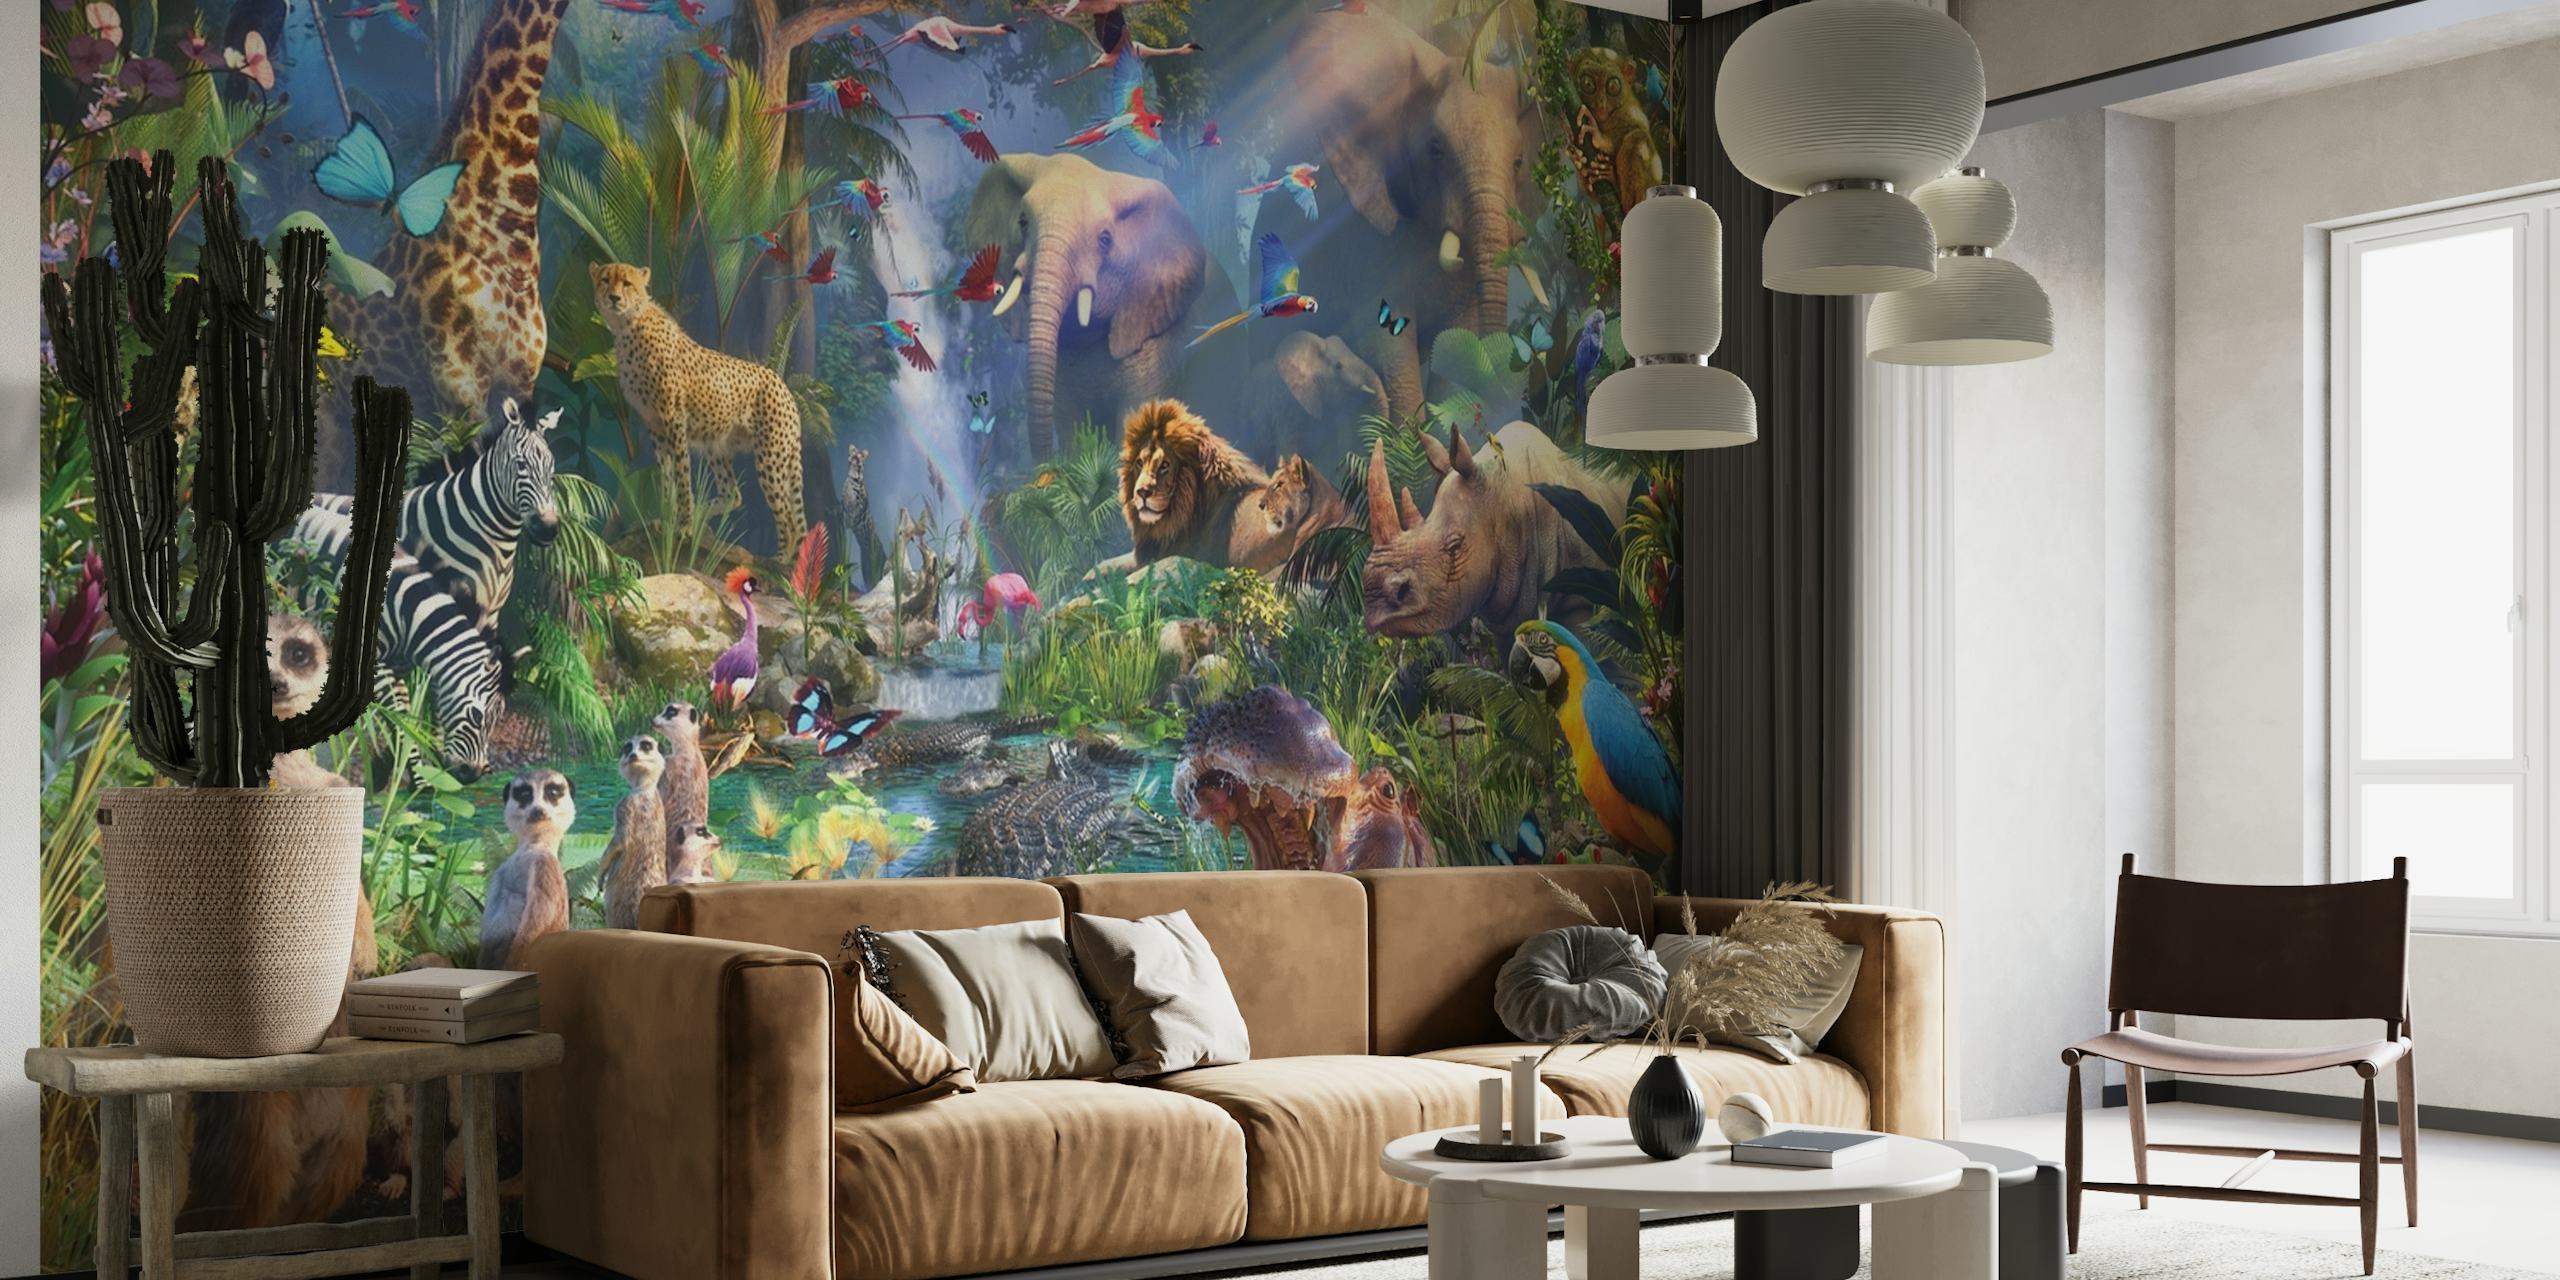 Zidni mural u obliku tropske džungle s živopisnim divljim životinjama i bujnim zelenilom